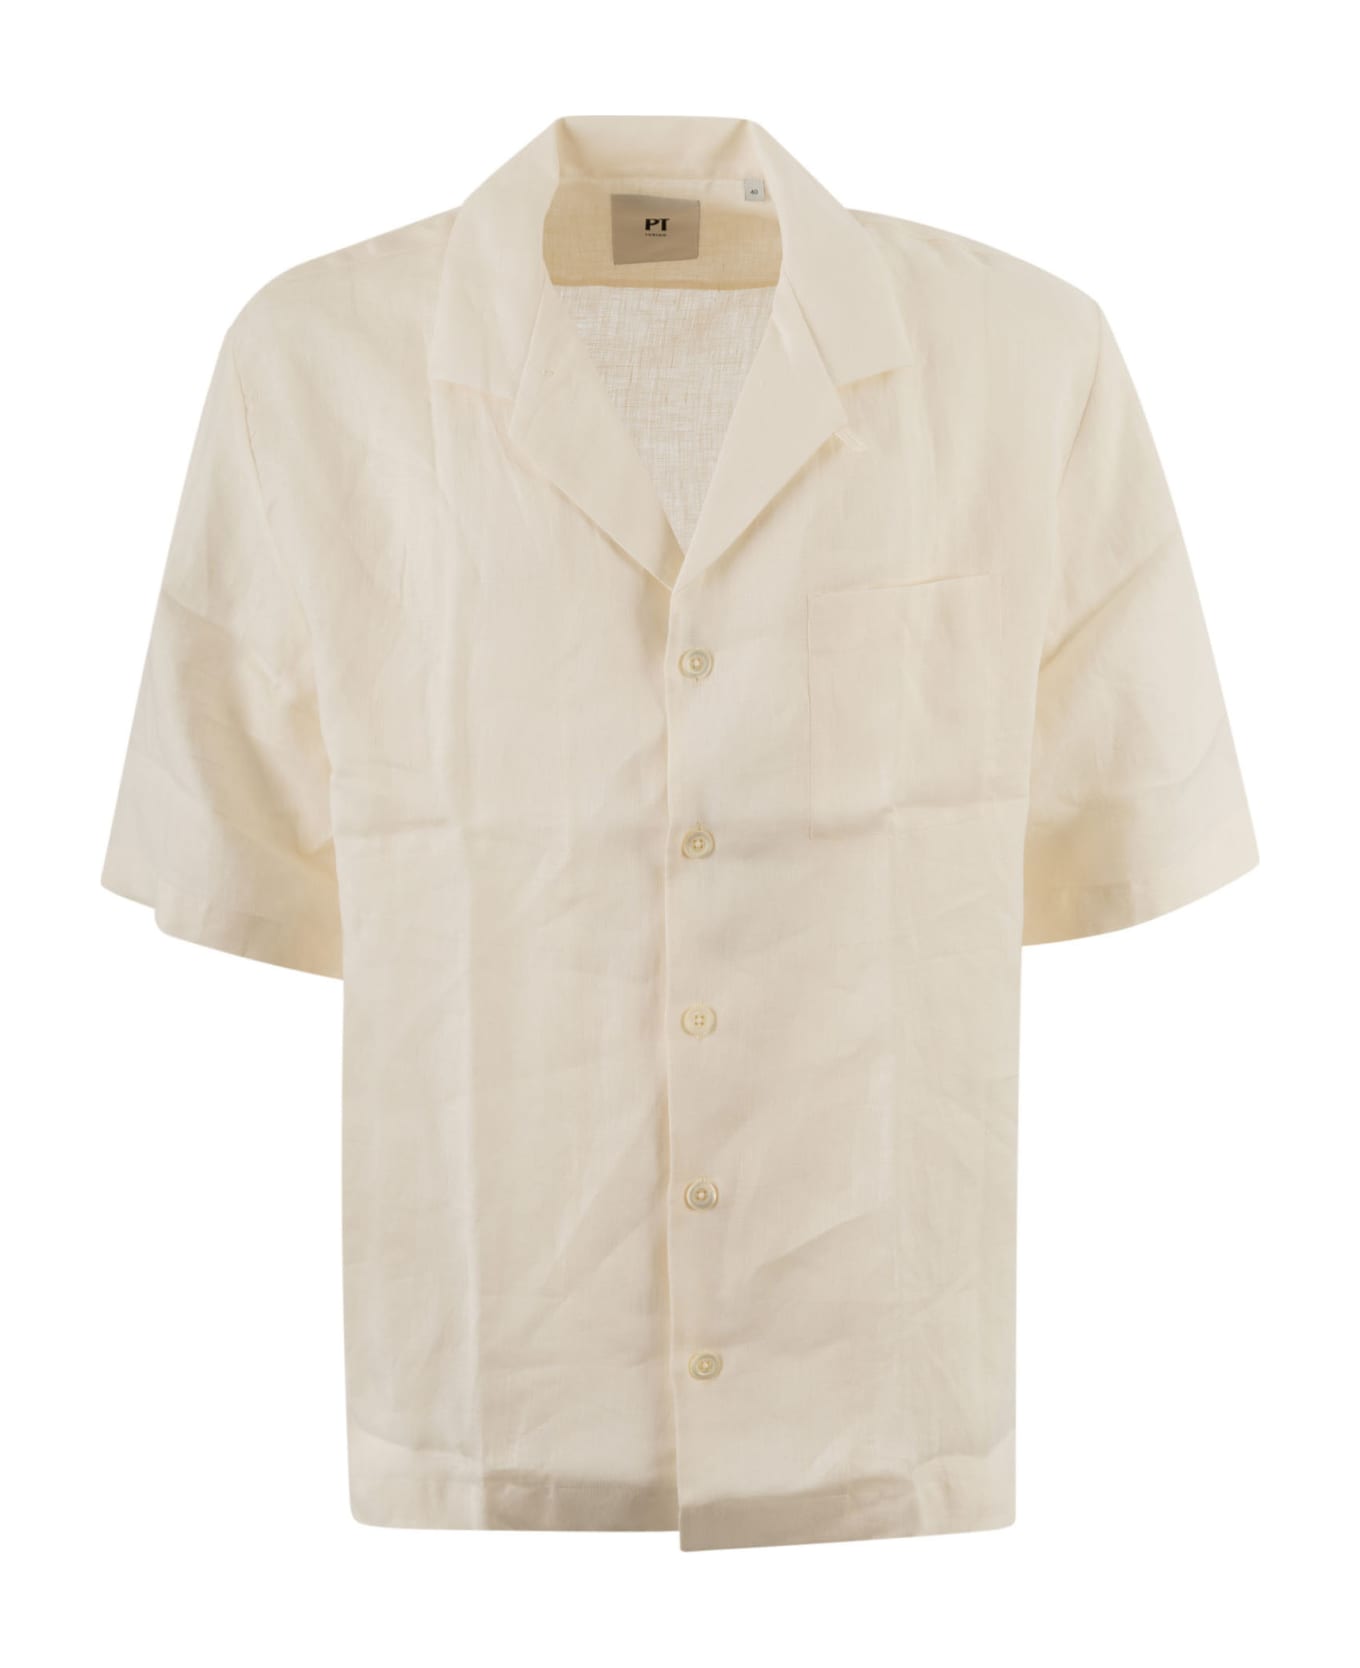 PT Torino Patched Pocket Plain Formal Shirt - C